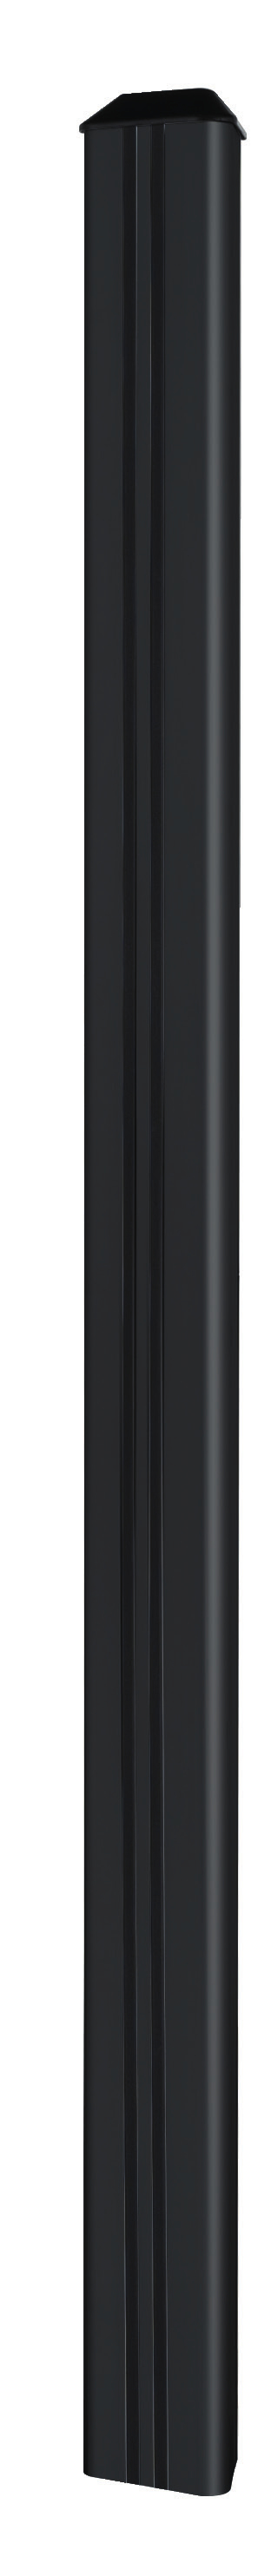 B-TECH SystemX Vertikal Säule BT8381-180B   schwarz